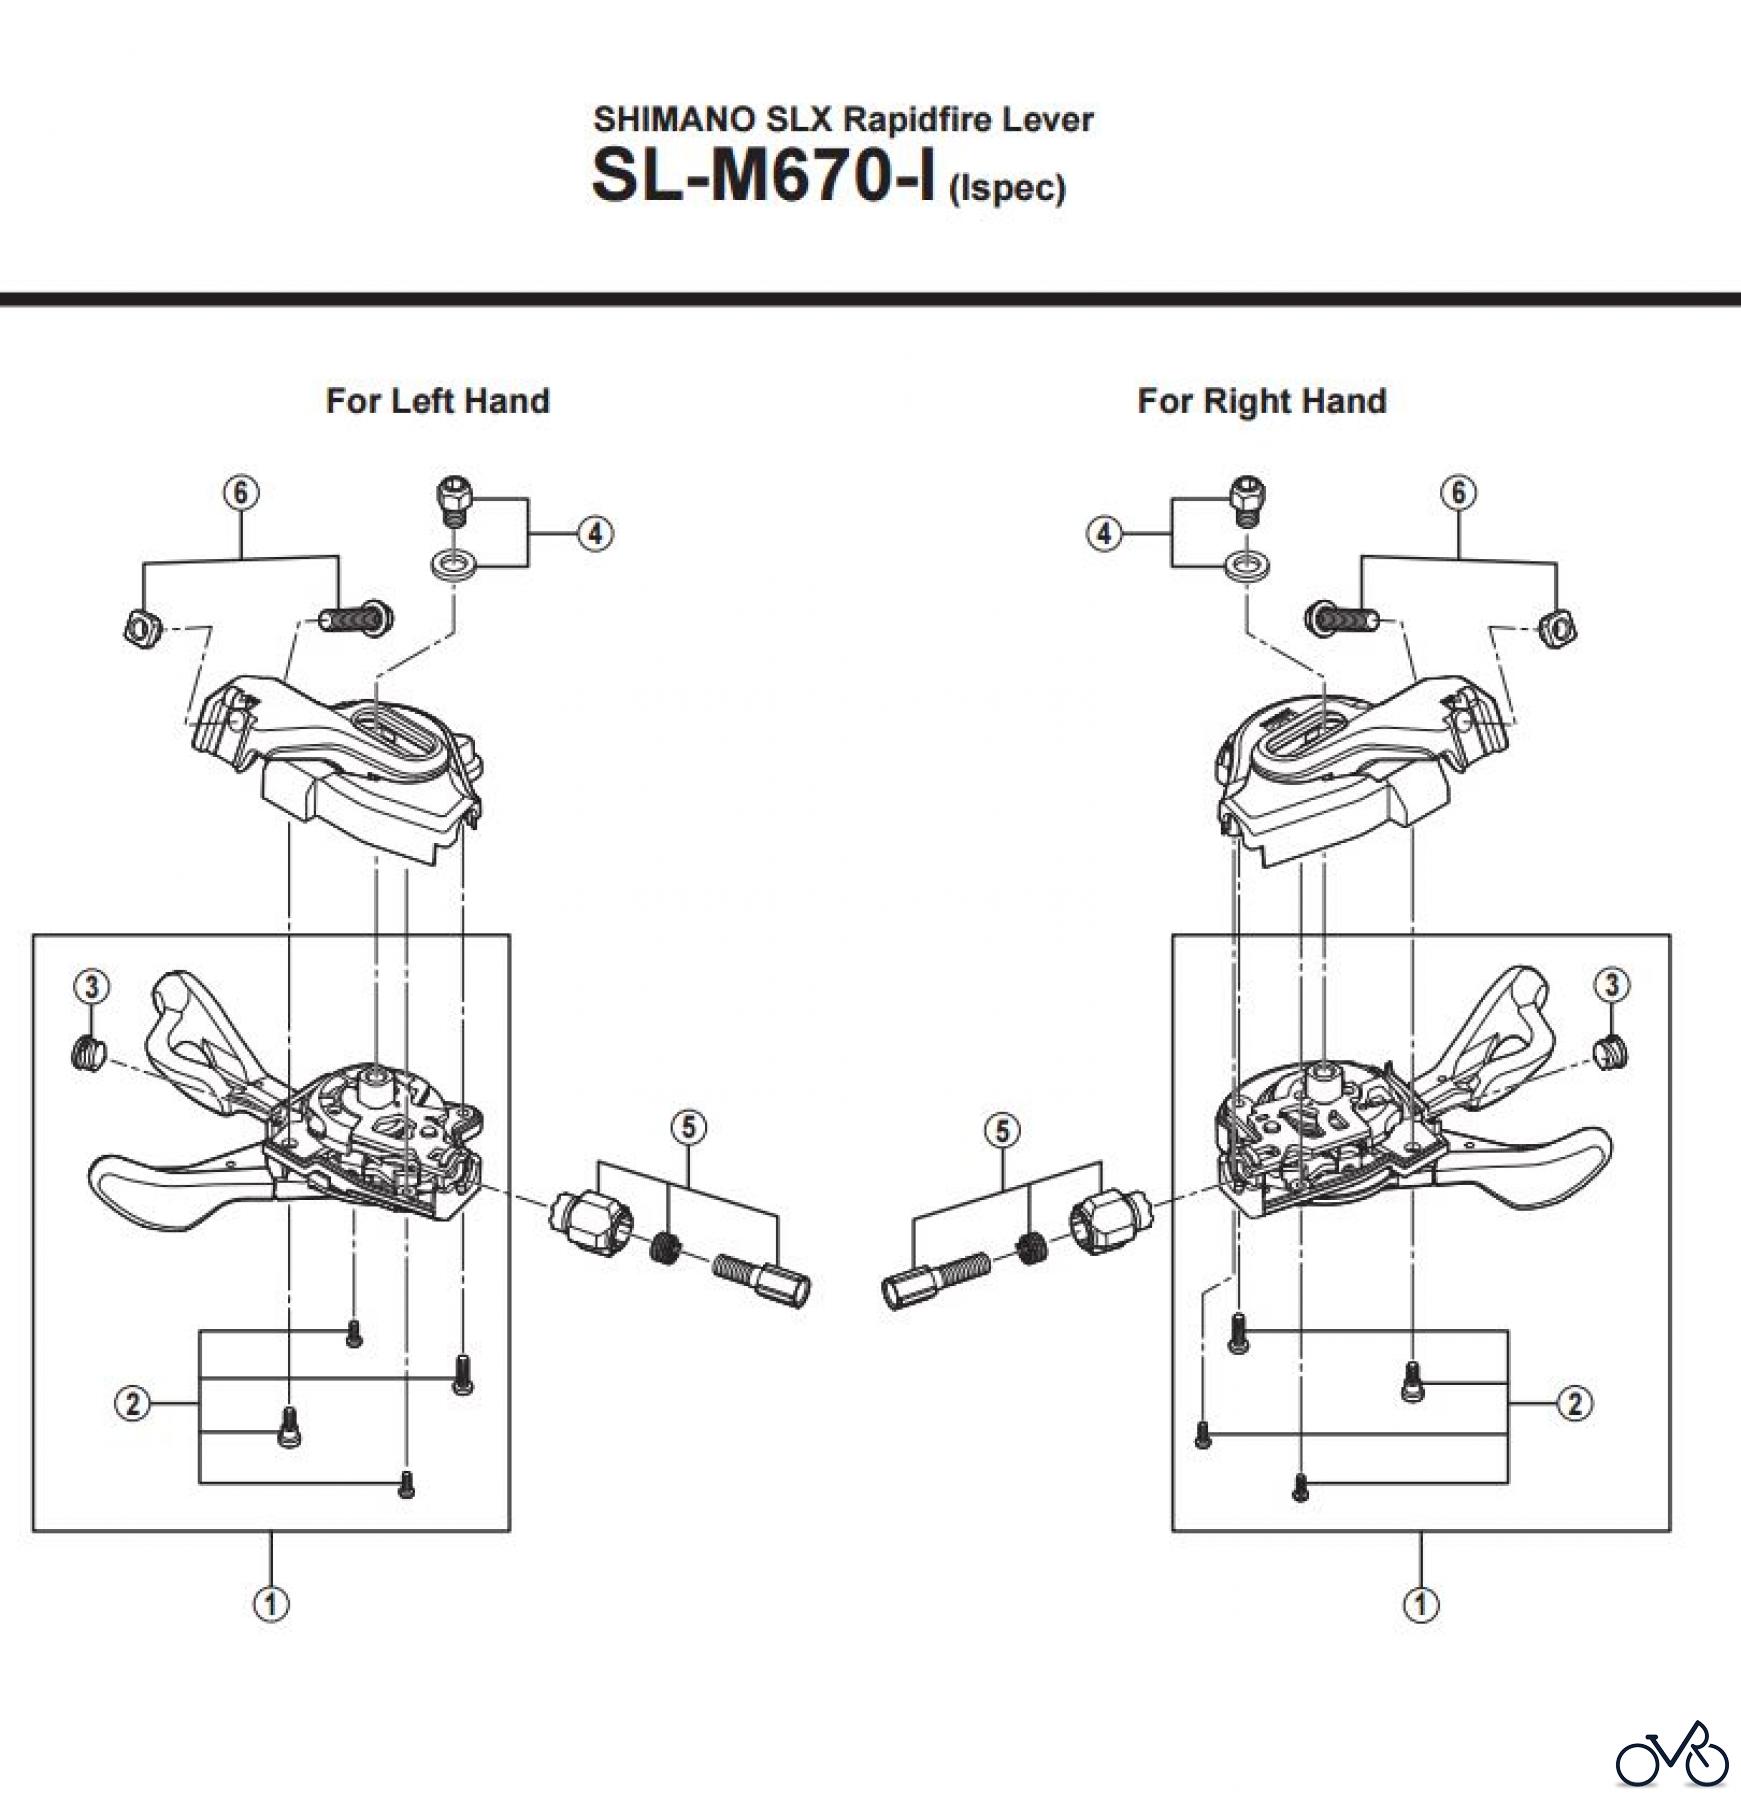  Shimano SL Shift Lever - Schalthebel SL-M670-I (Ispec) SHIMANO SLX Rapidfire Lever